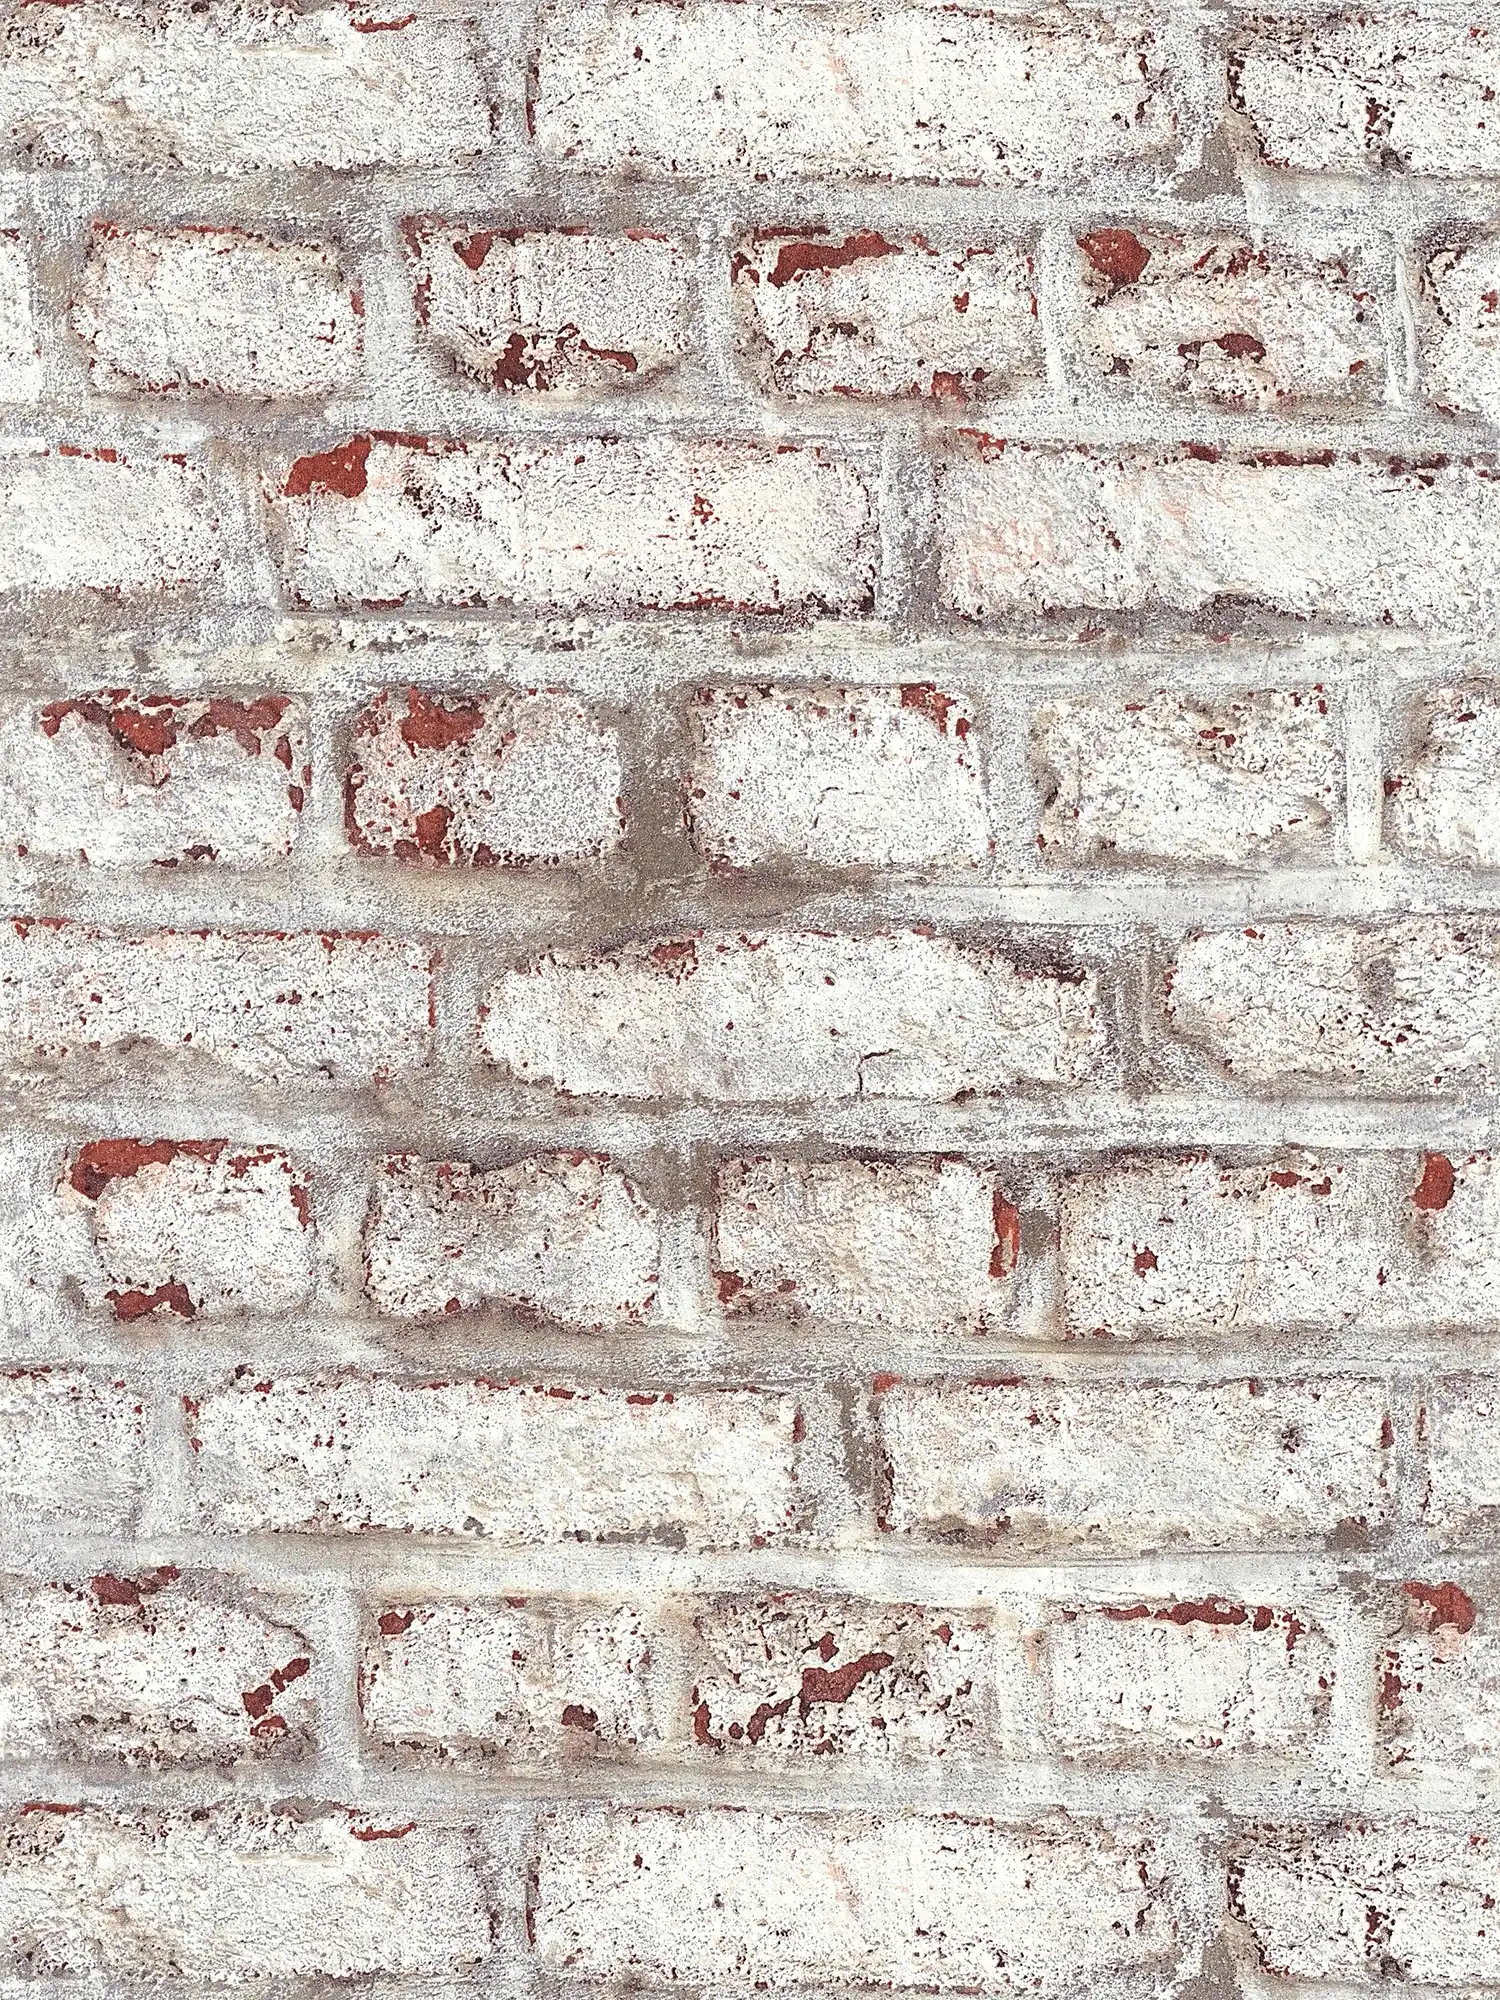         Masonry wallpaper with rustic brick wall whitewashed - white, brown, grey
    